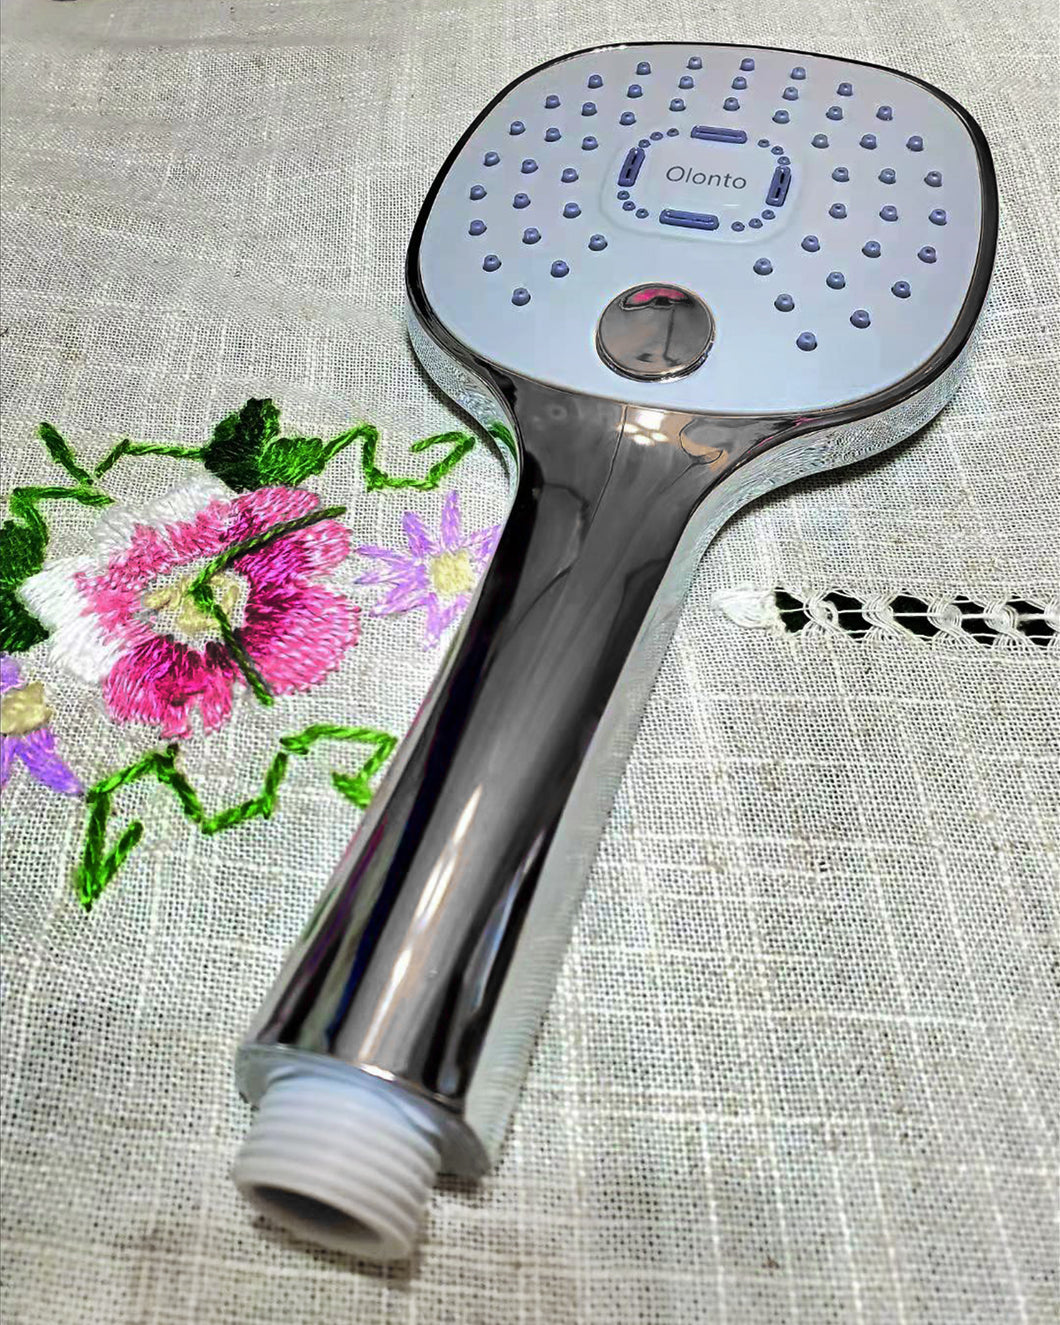 Olonto hand shower,Adjustable High Pressure Rainfall Spray With Removable Hand Held Rain Showerhead For The Bathroom, 1.8 GPM